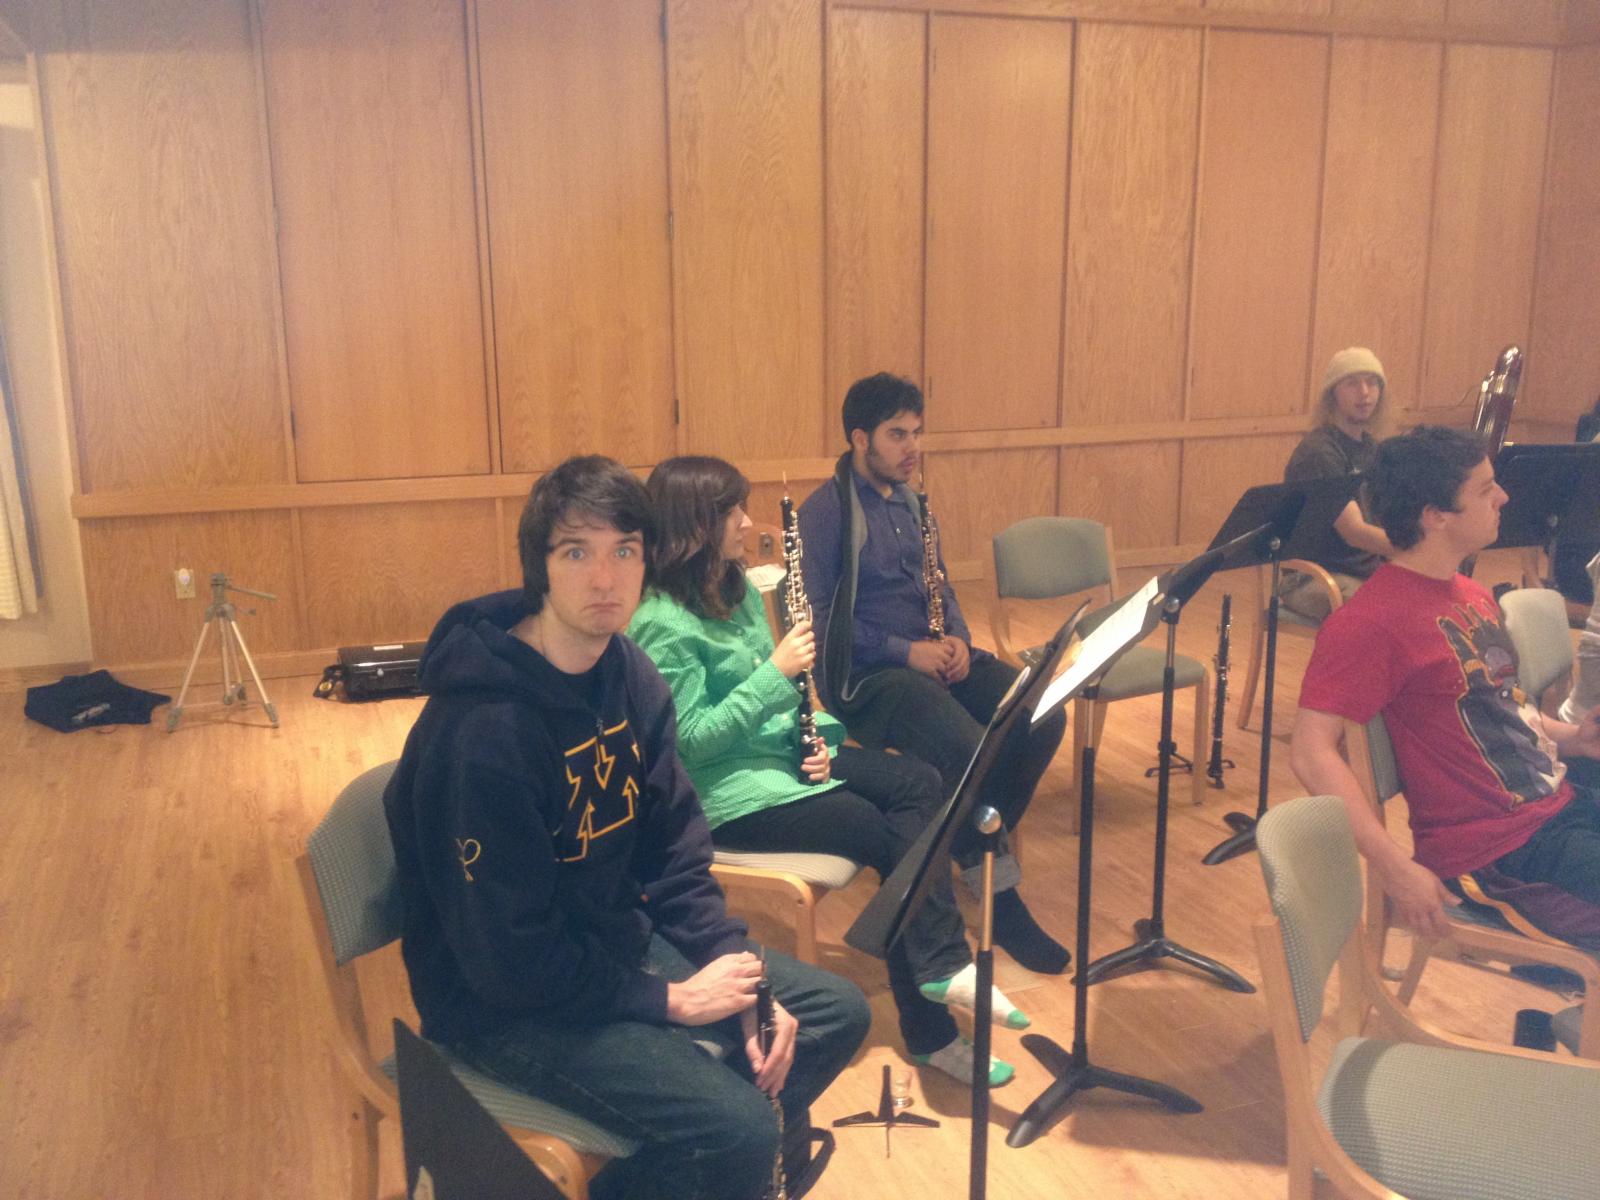 Oboe students rehearsing at Bjorklunden